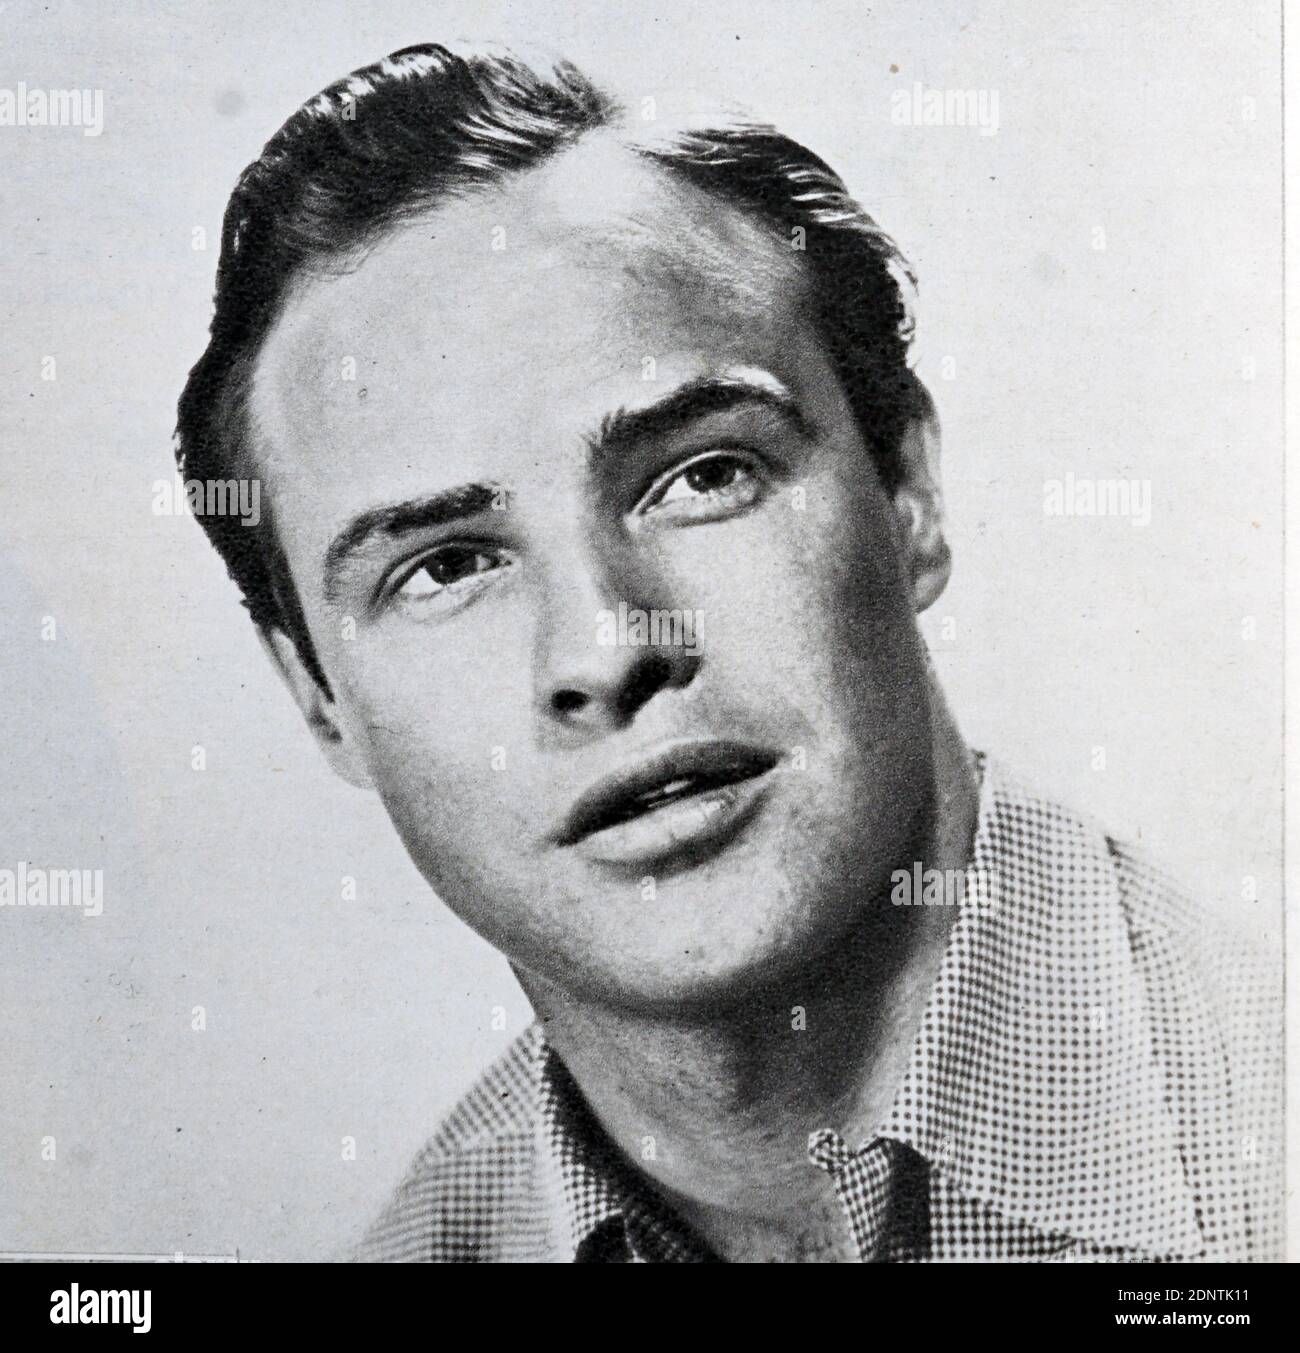 Photograph of Marlon Brando (1924-2004) an American actor and film director. Stock Photo